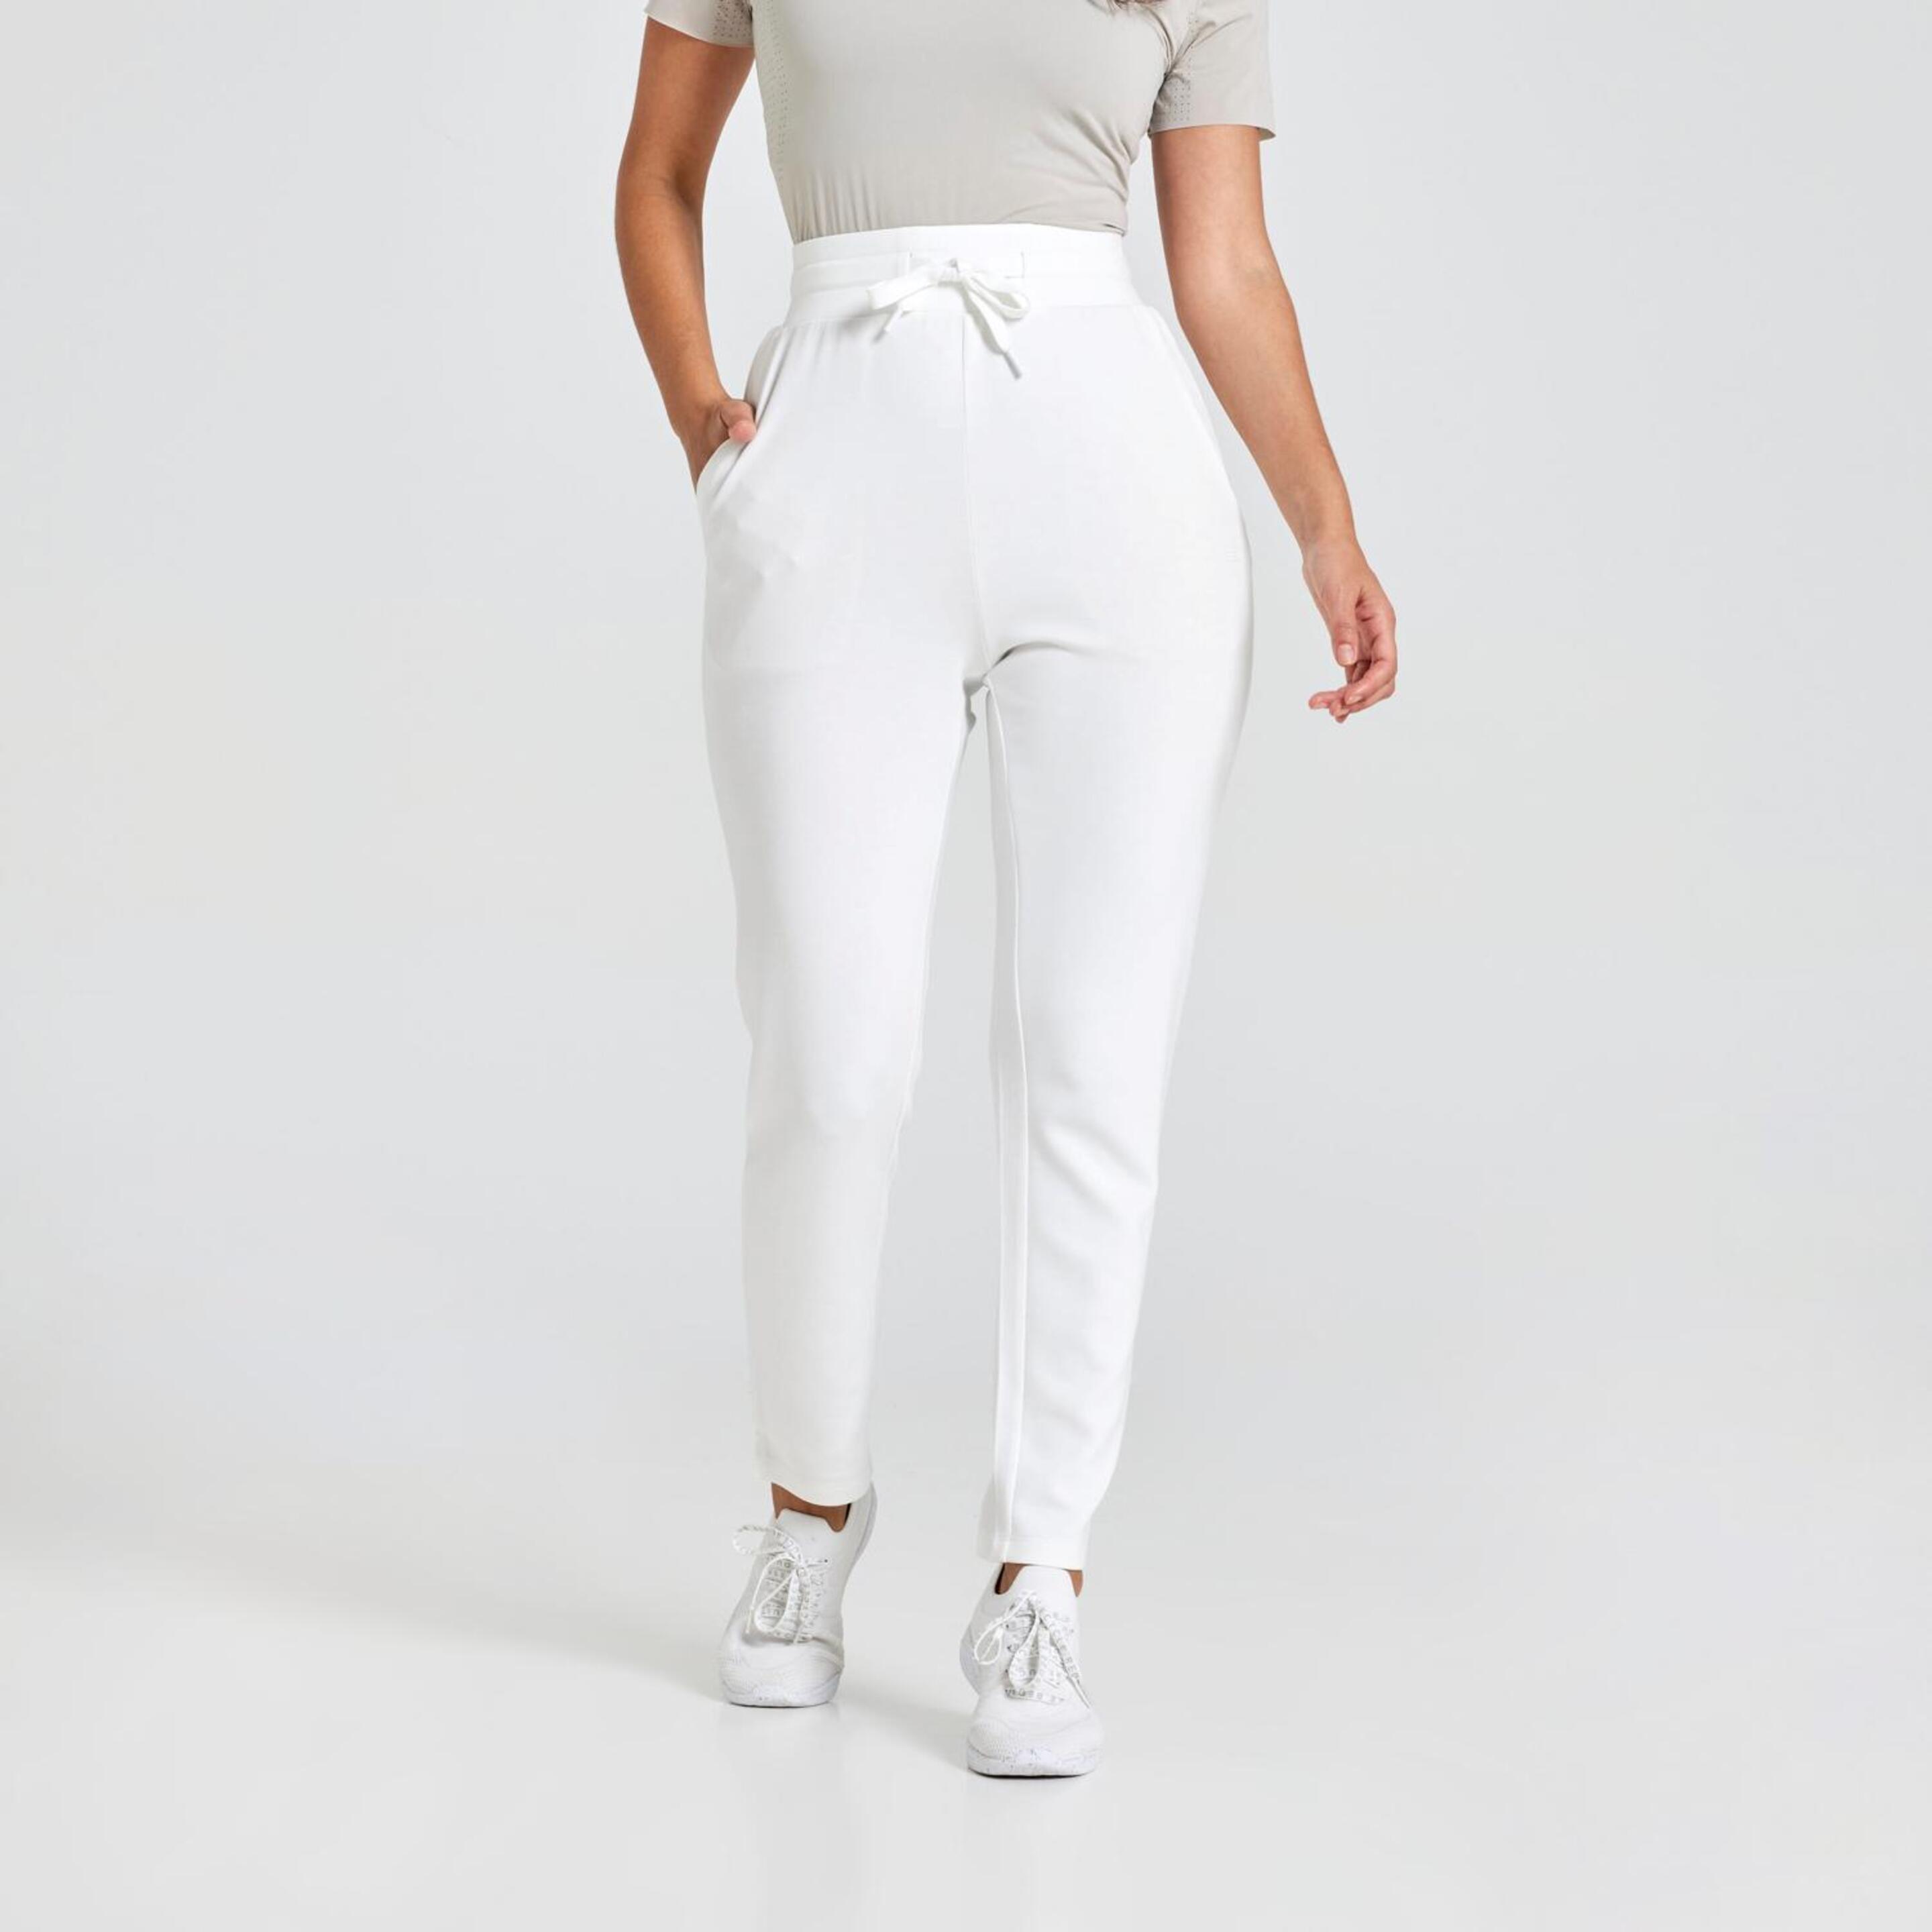 Doone Casual Luxe - blanco - Pantalón Mujer